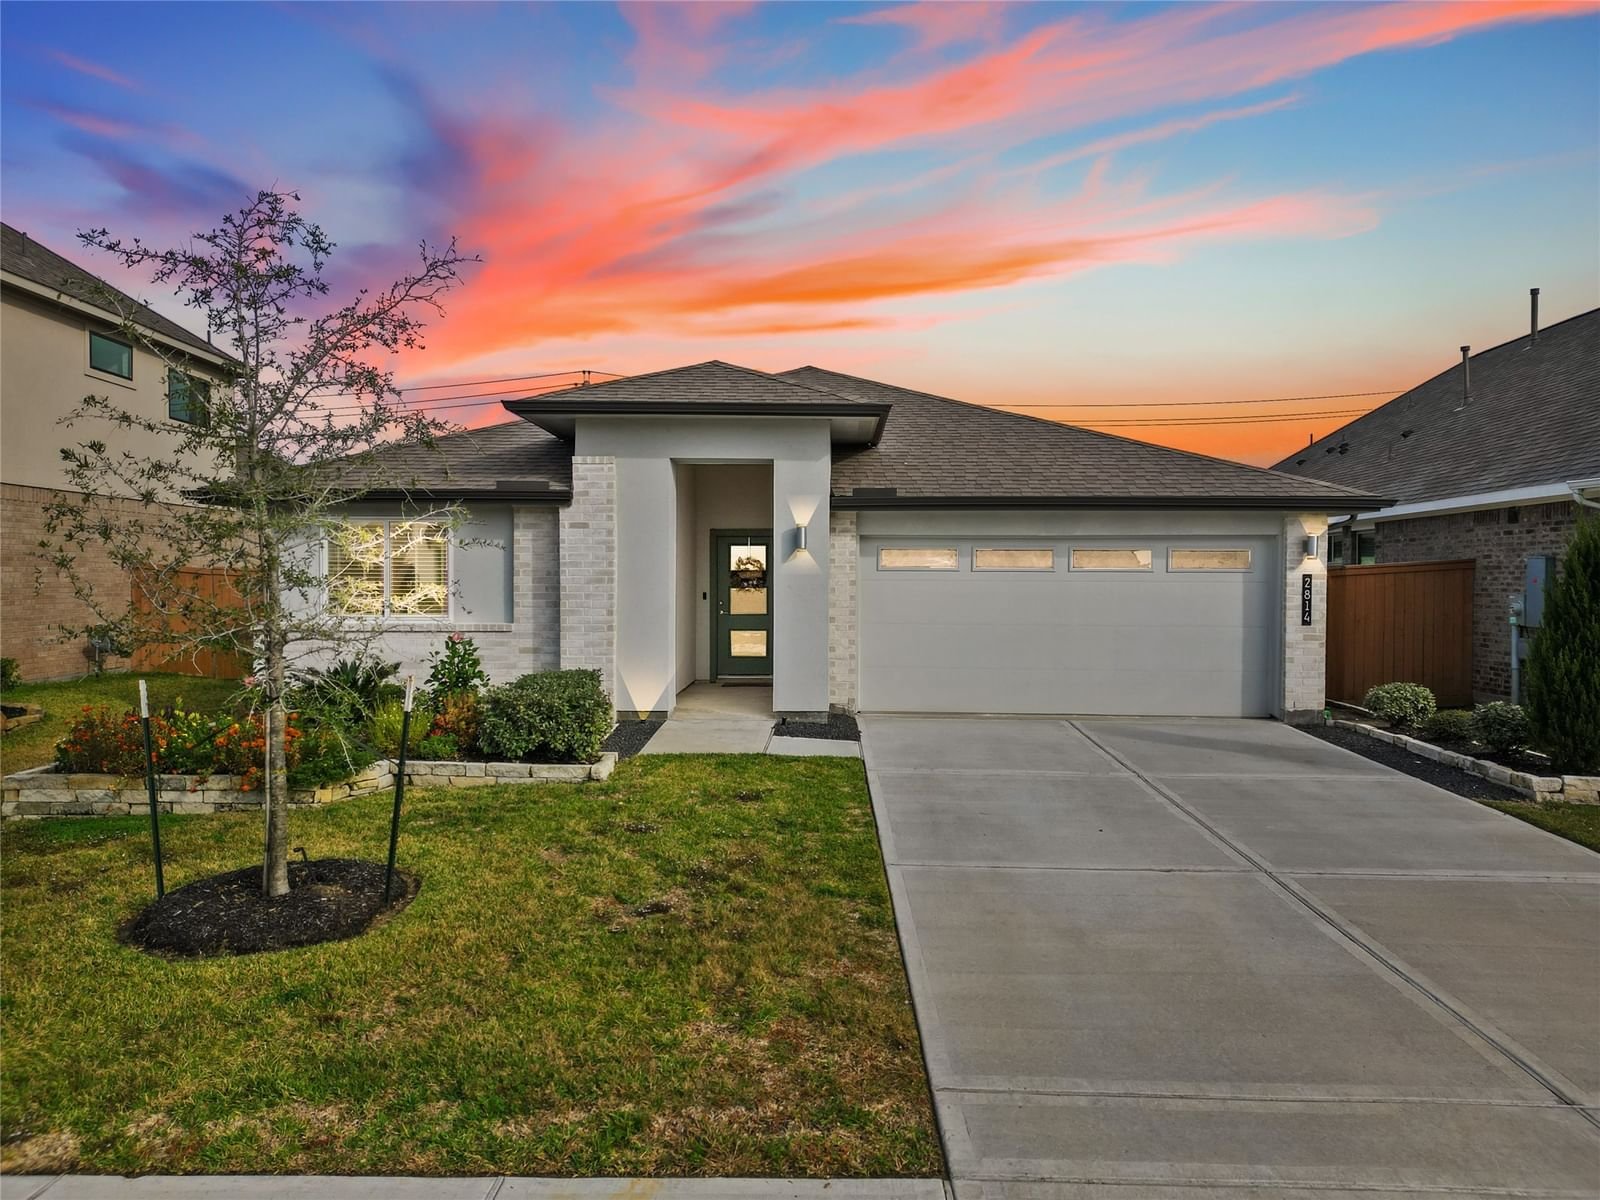 Real estate property located at 2814 Bayrose, Galveston, Lago Mar Pod 6 Sec 2, Texas City, TX, US